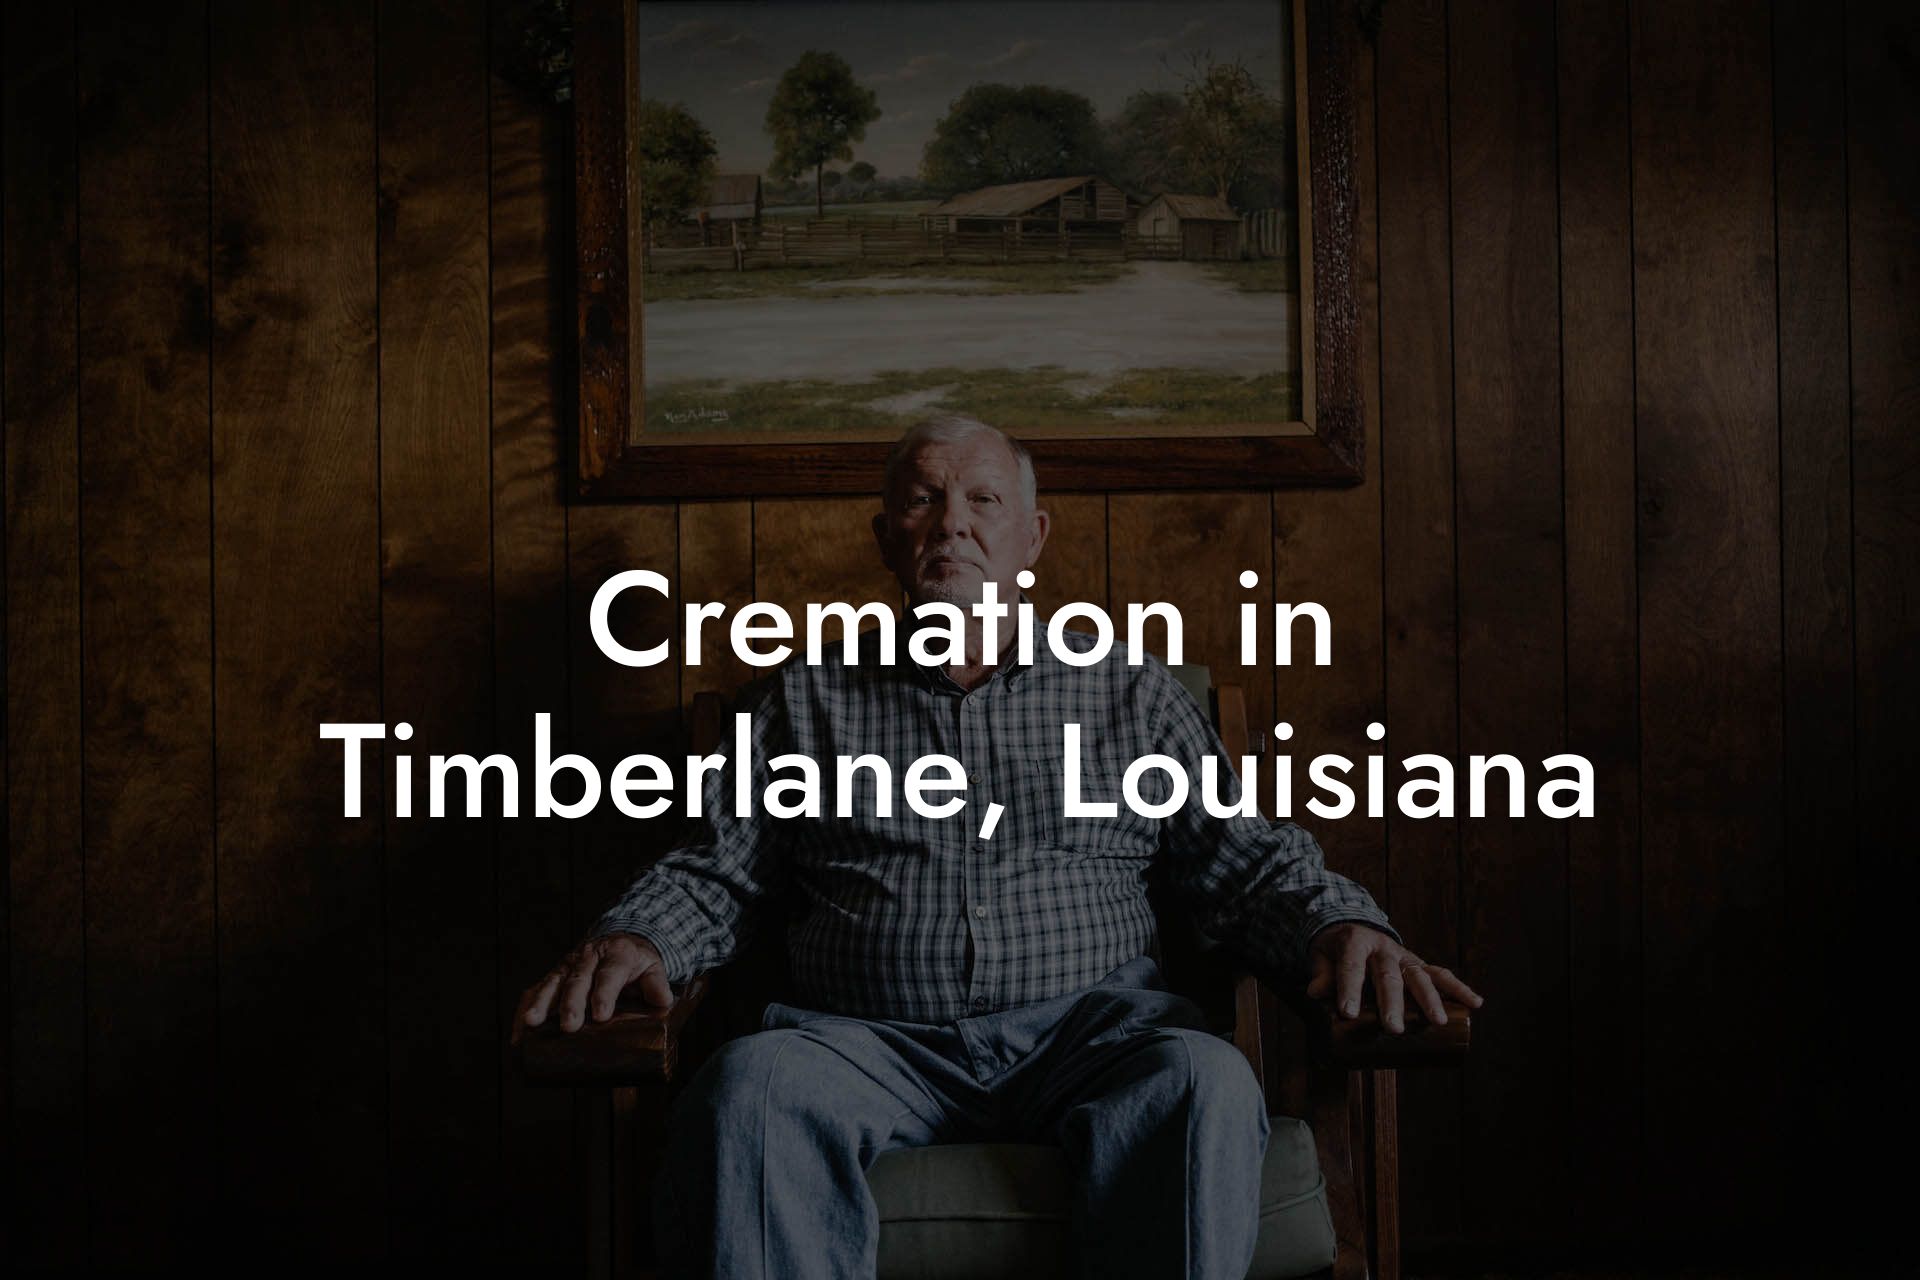 Cremation in Timberlane, Louisiana